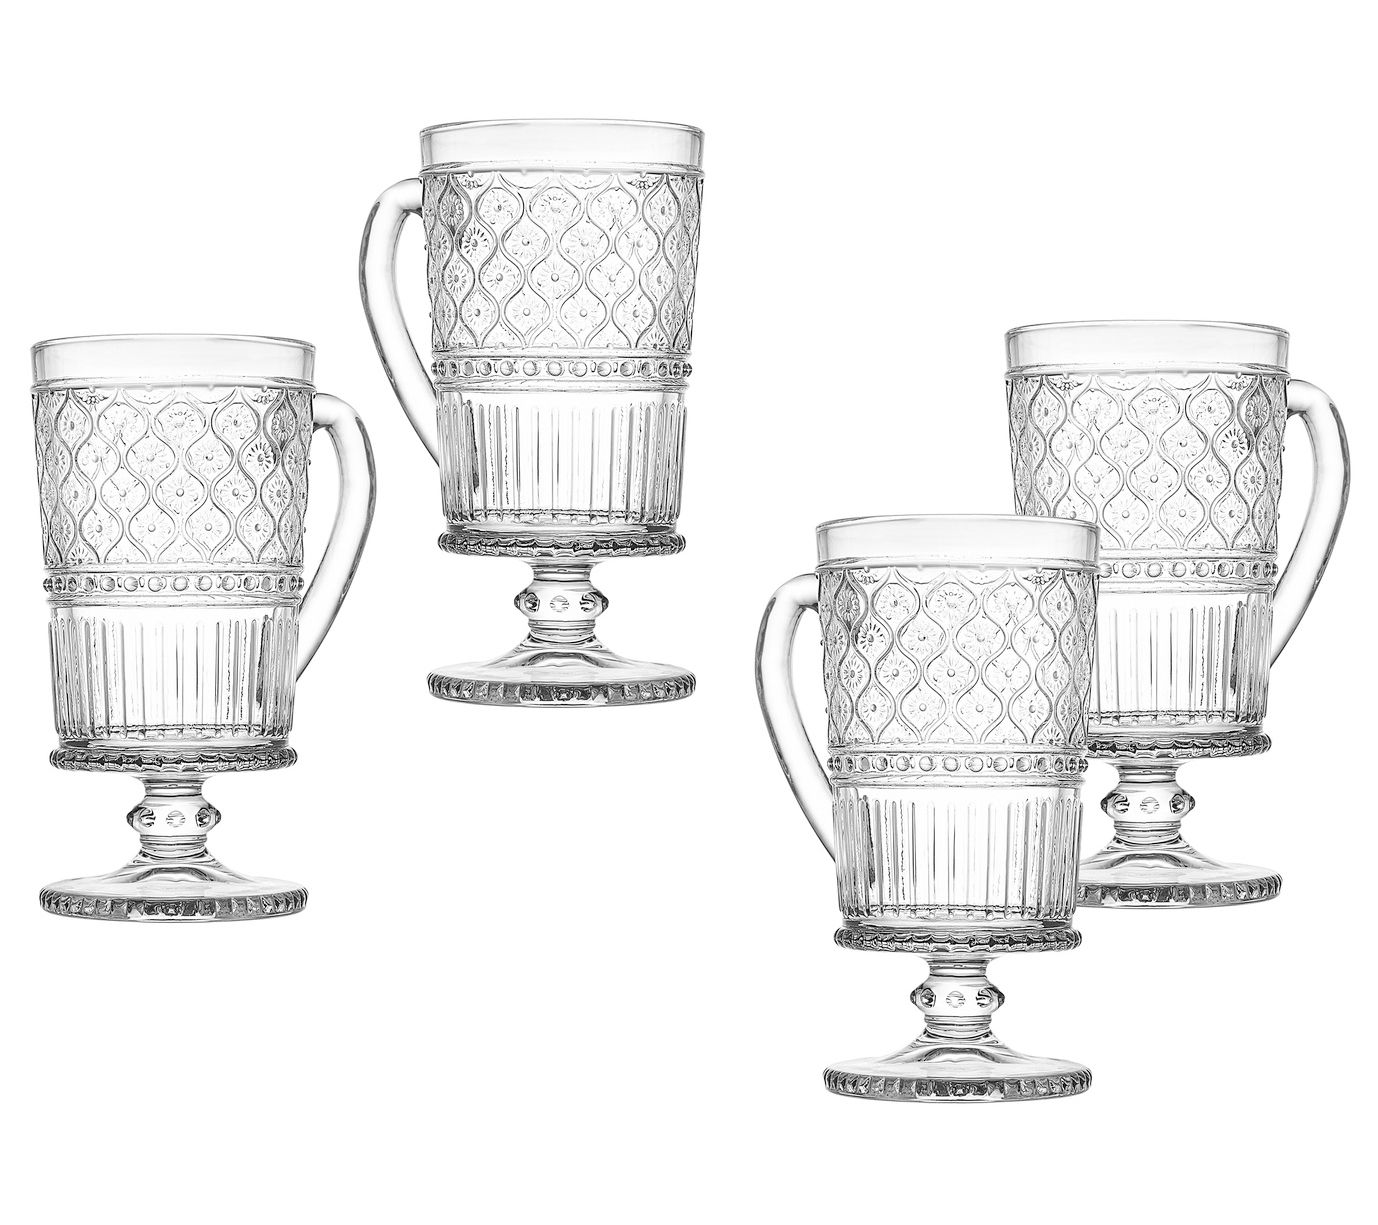 Godinger Glass Travel Mug Tumbler Double Wall Cup for Coffee/Tea - 12oz